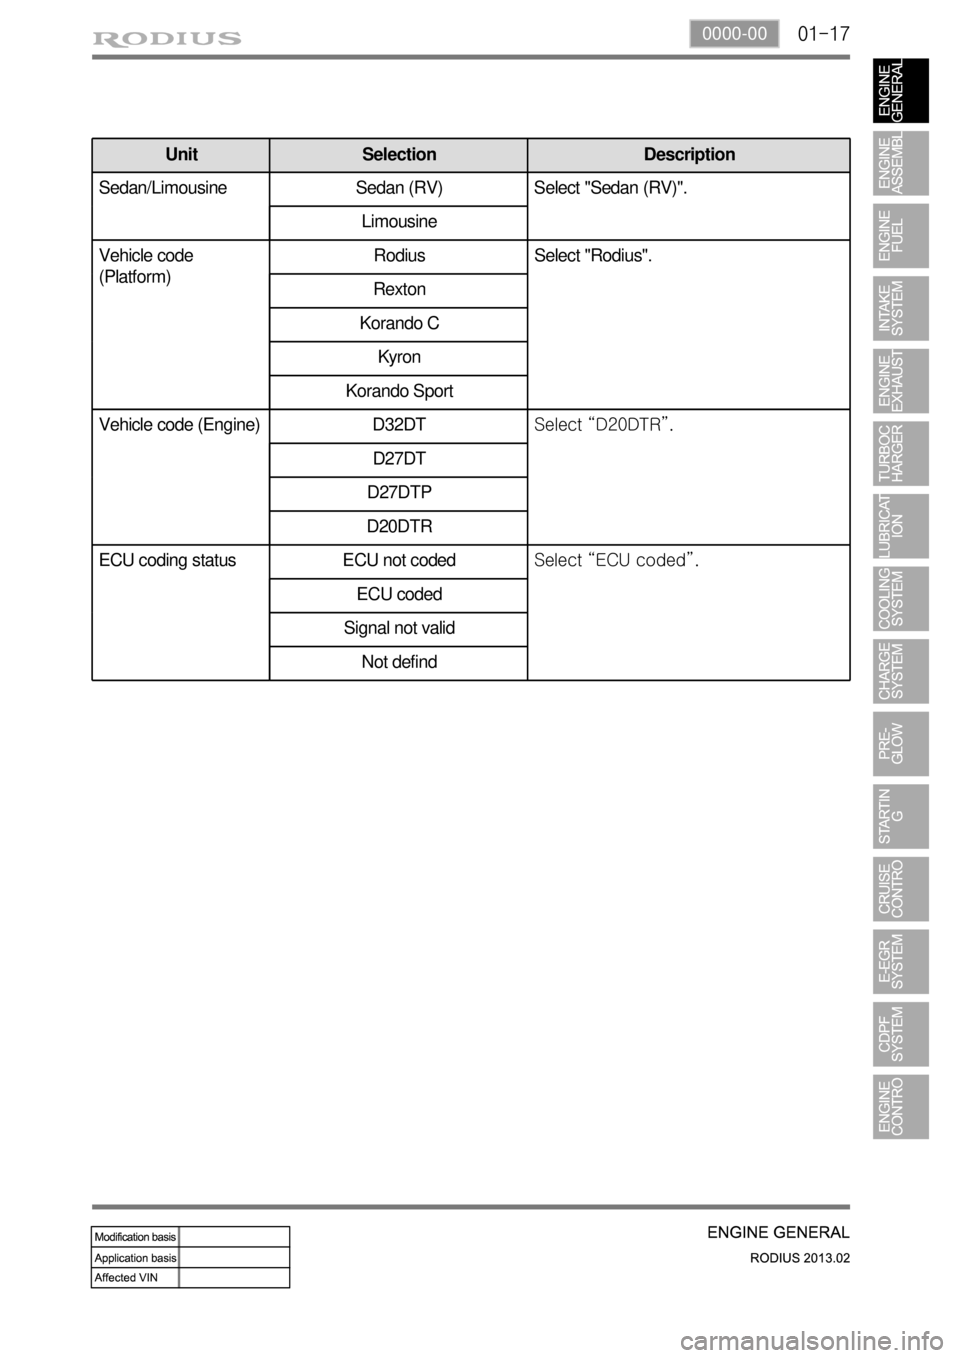 SSANGYONG TURISMO 2013  Service Manual 01-170000-00
Unit Selection Description
Sedan/Limousine Sedan (RV) Select "Sedan (RV)".
Limousine
Vehicle code 
(Platform)Rodius Select "Rodius".
Rexton
Korando C
Kyron
Korando Sport
Vehicle code (Eng